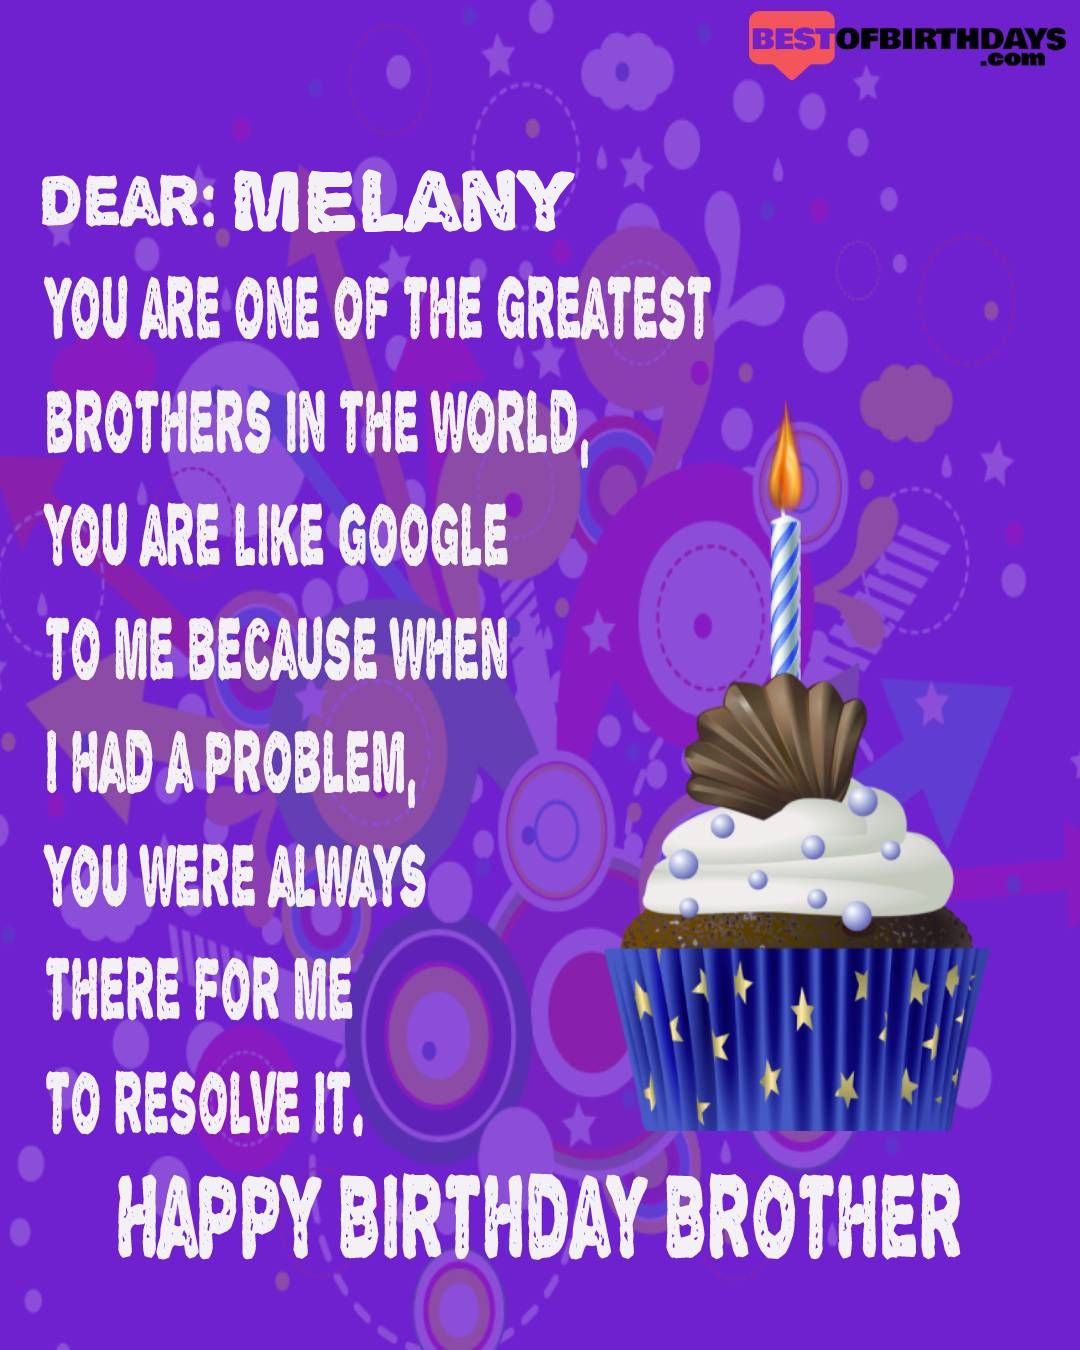 Happy birthday melany bhai brother bro